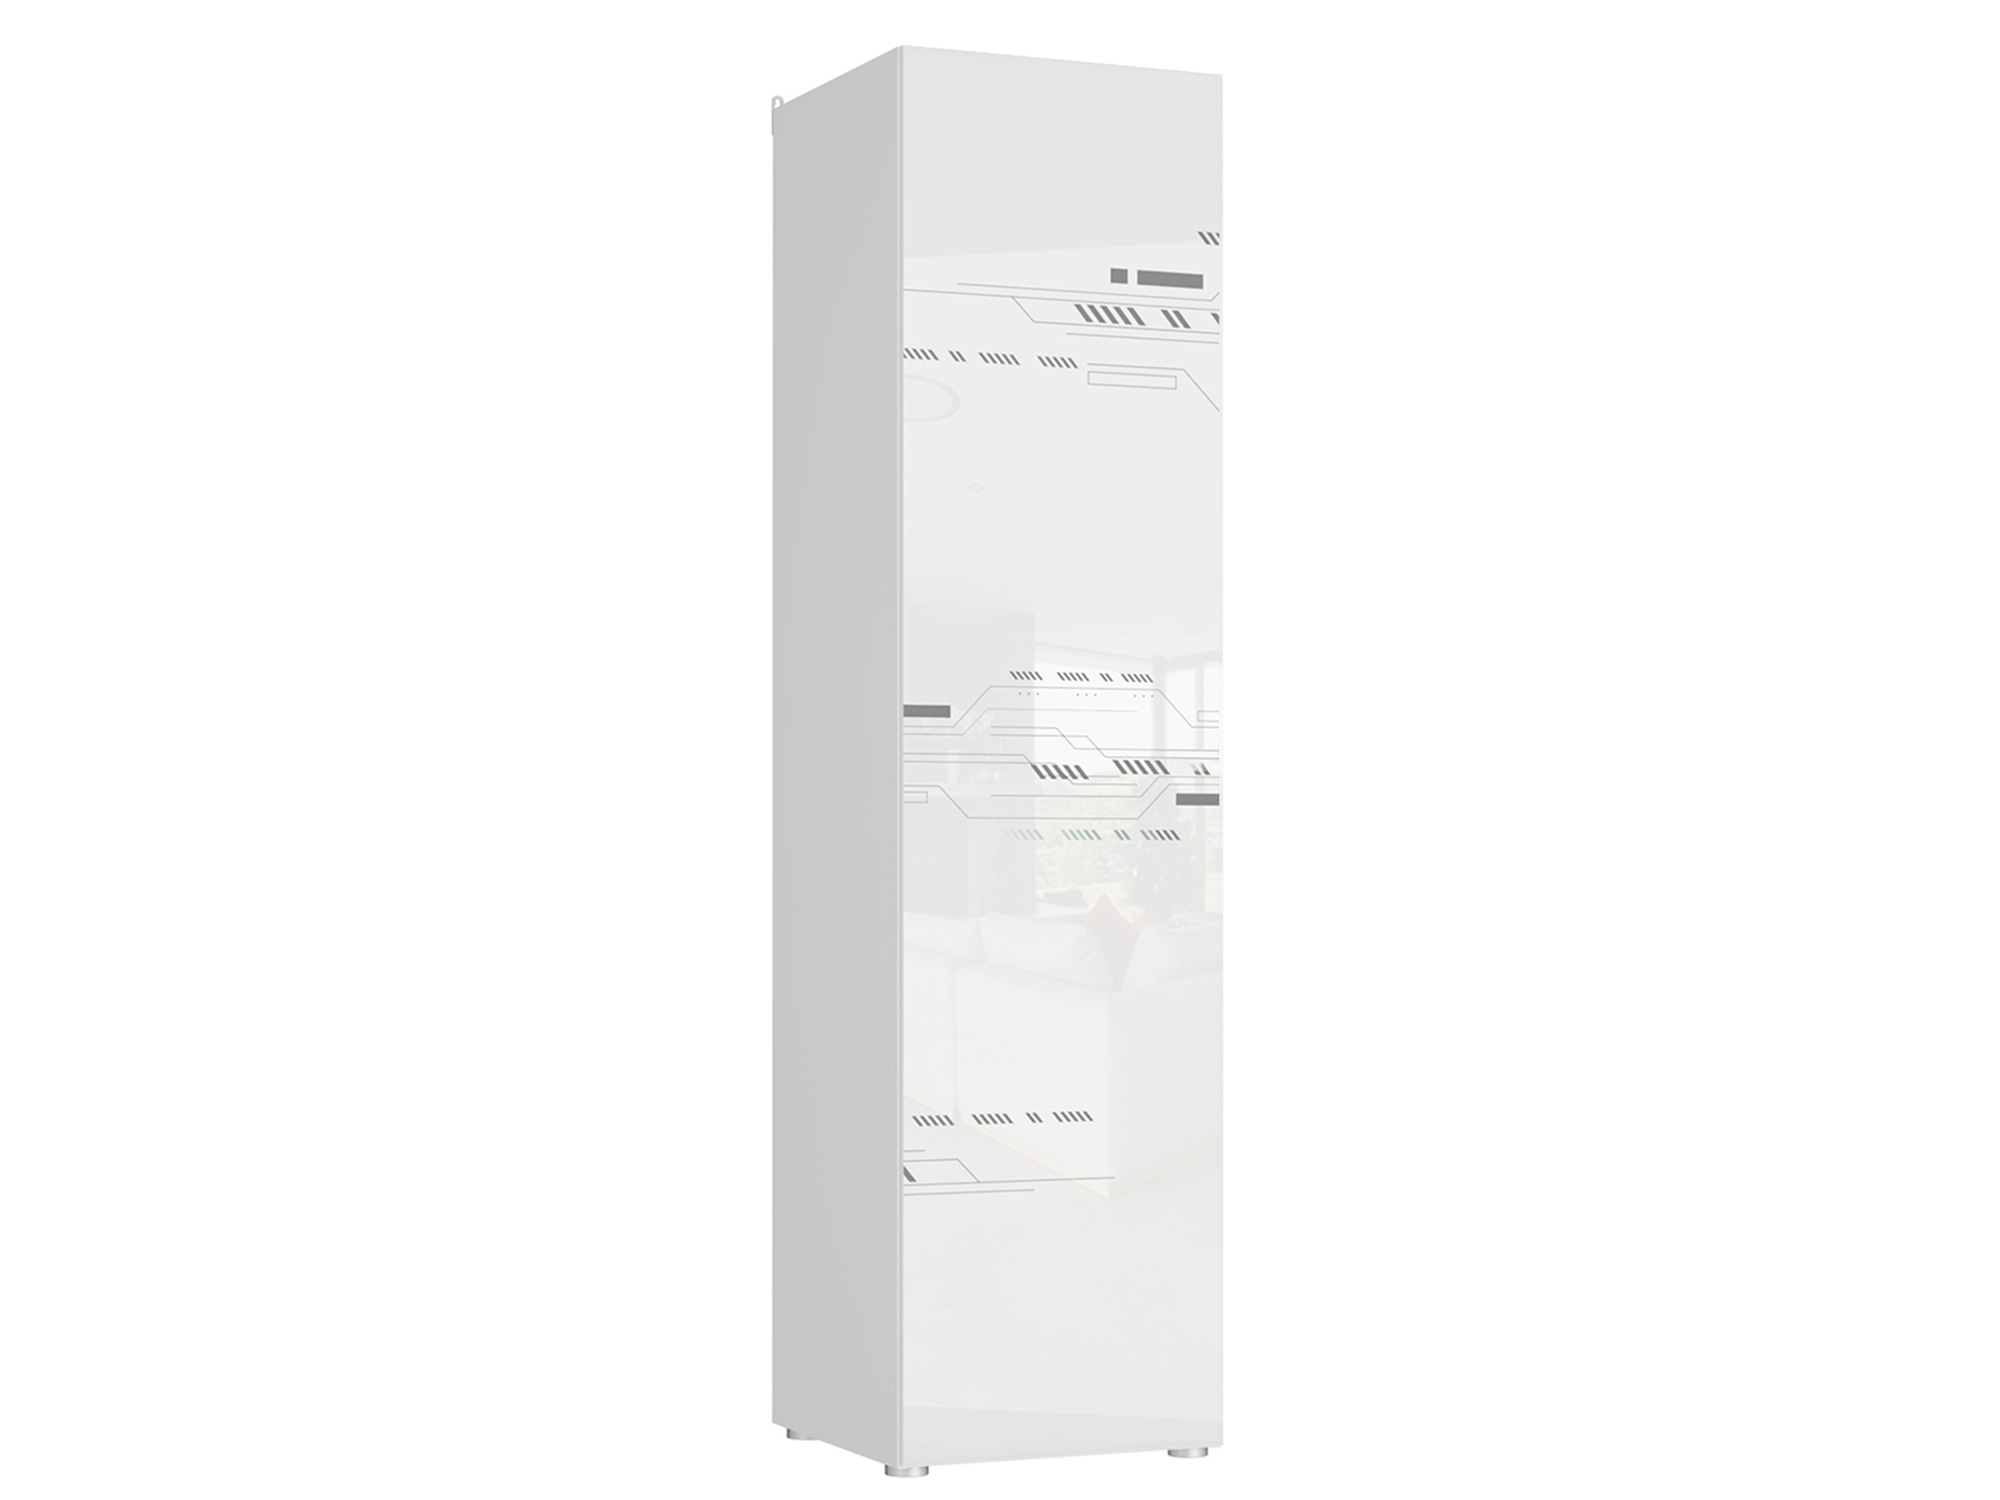 Шкаф 1-дверный Модерн (Modern) Техно Белый глянец, , Белый, МДФ, ЛДСП шкаф угловой модерн modern техно белый глянец белый мдф лдсп